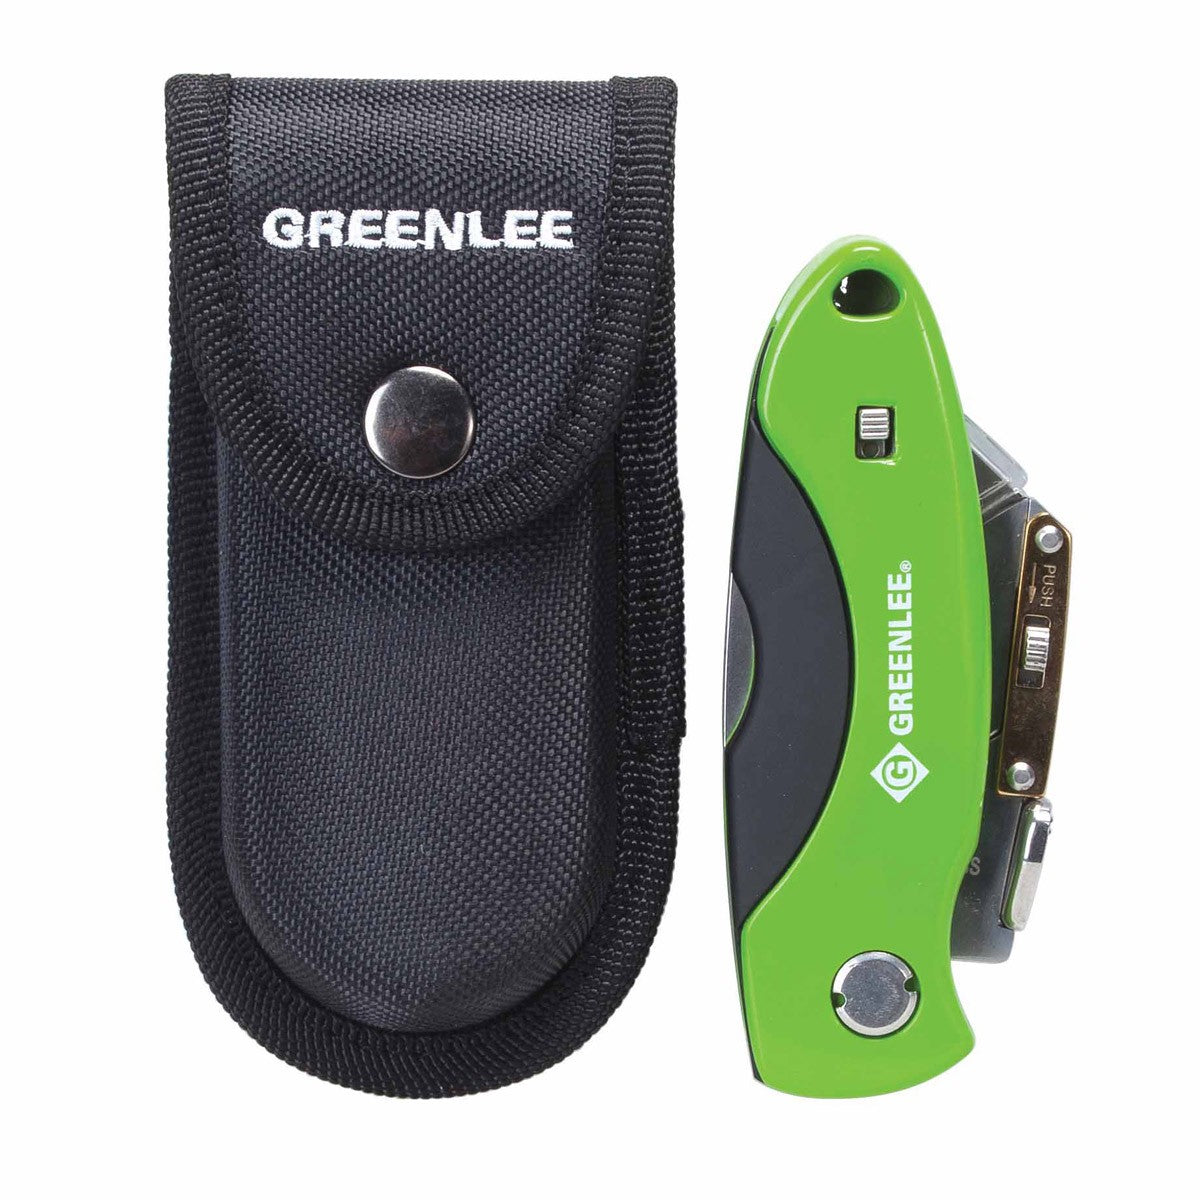 Greenlee 0652-11 Utility Knife